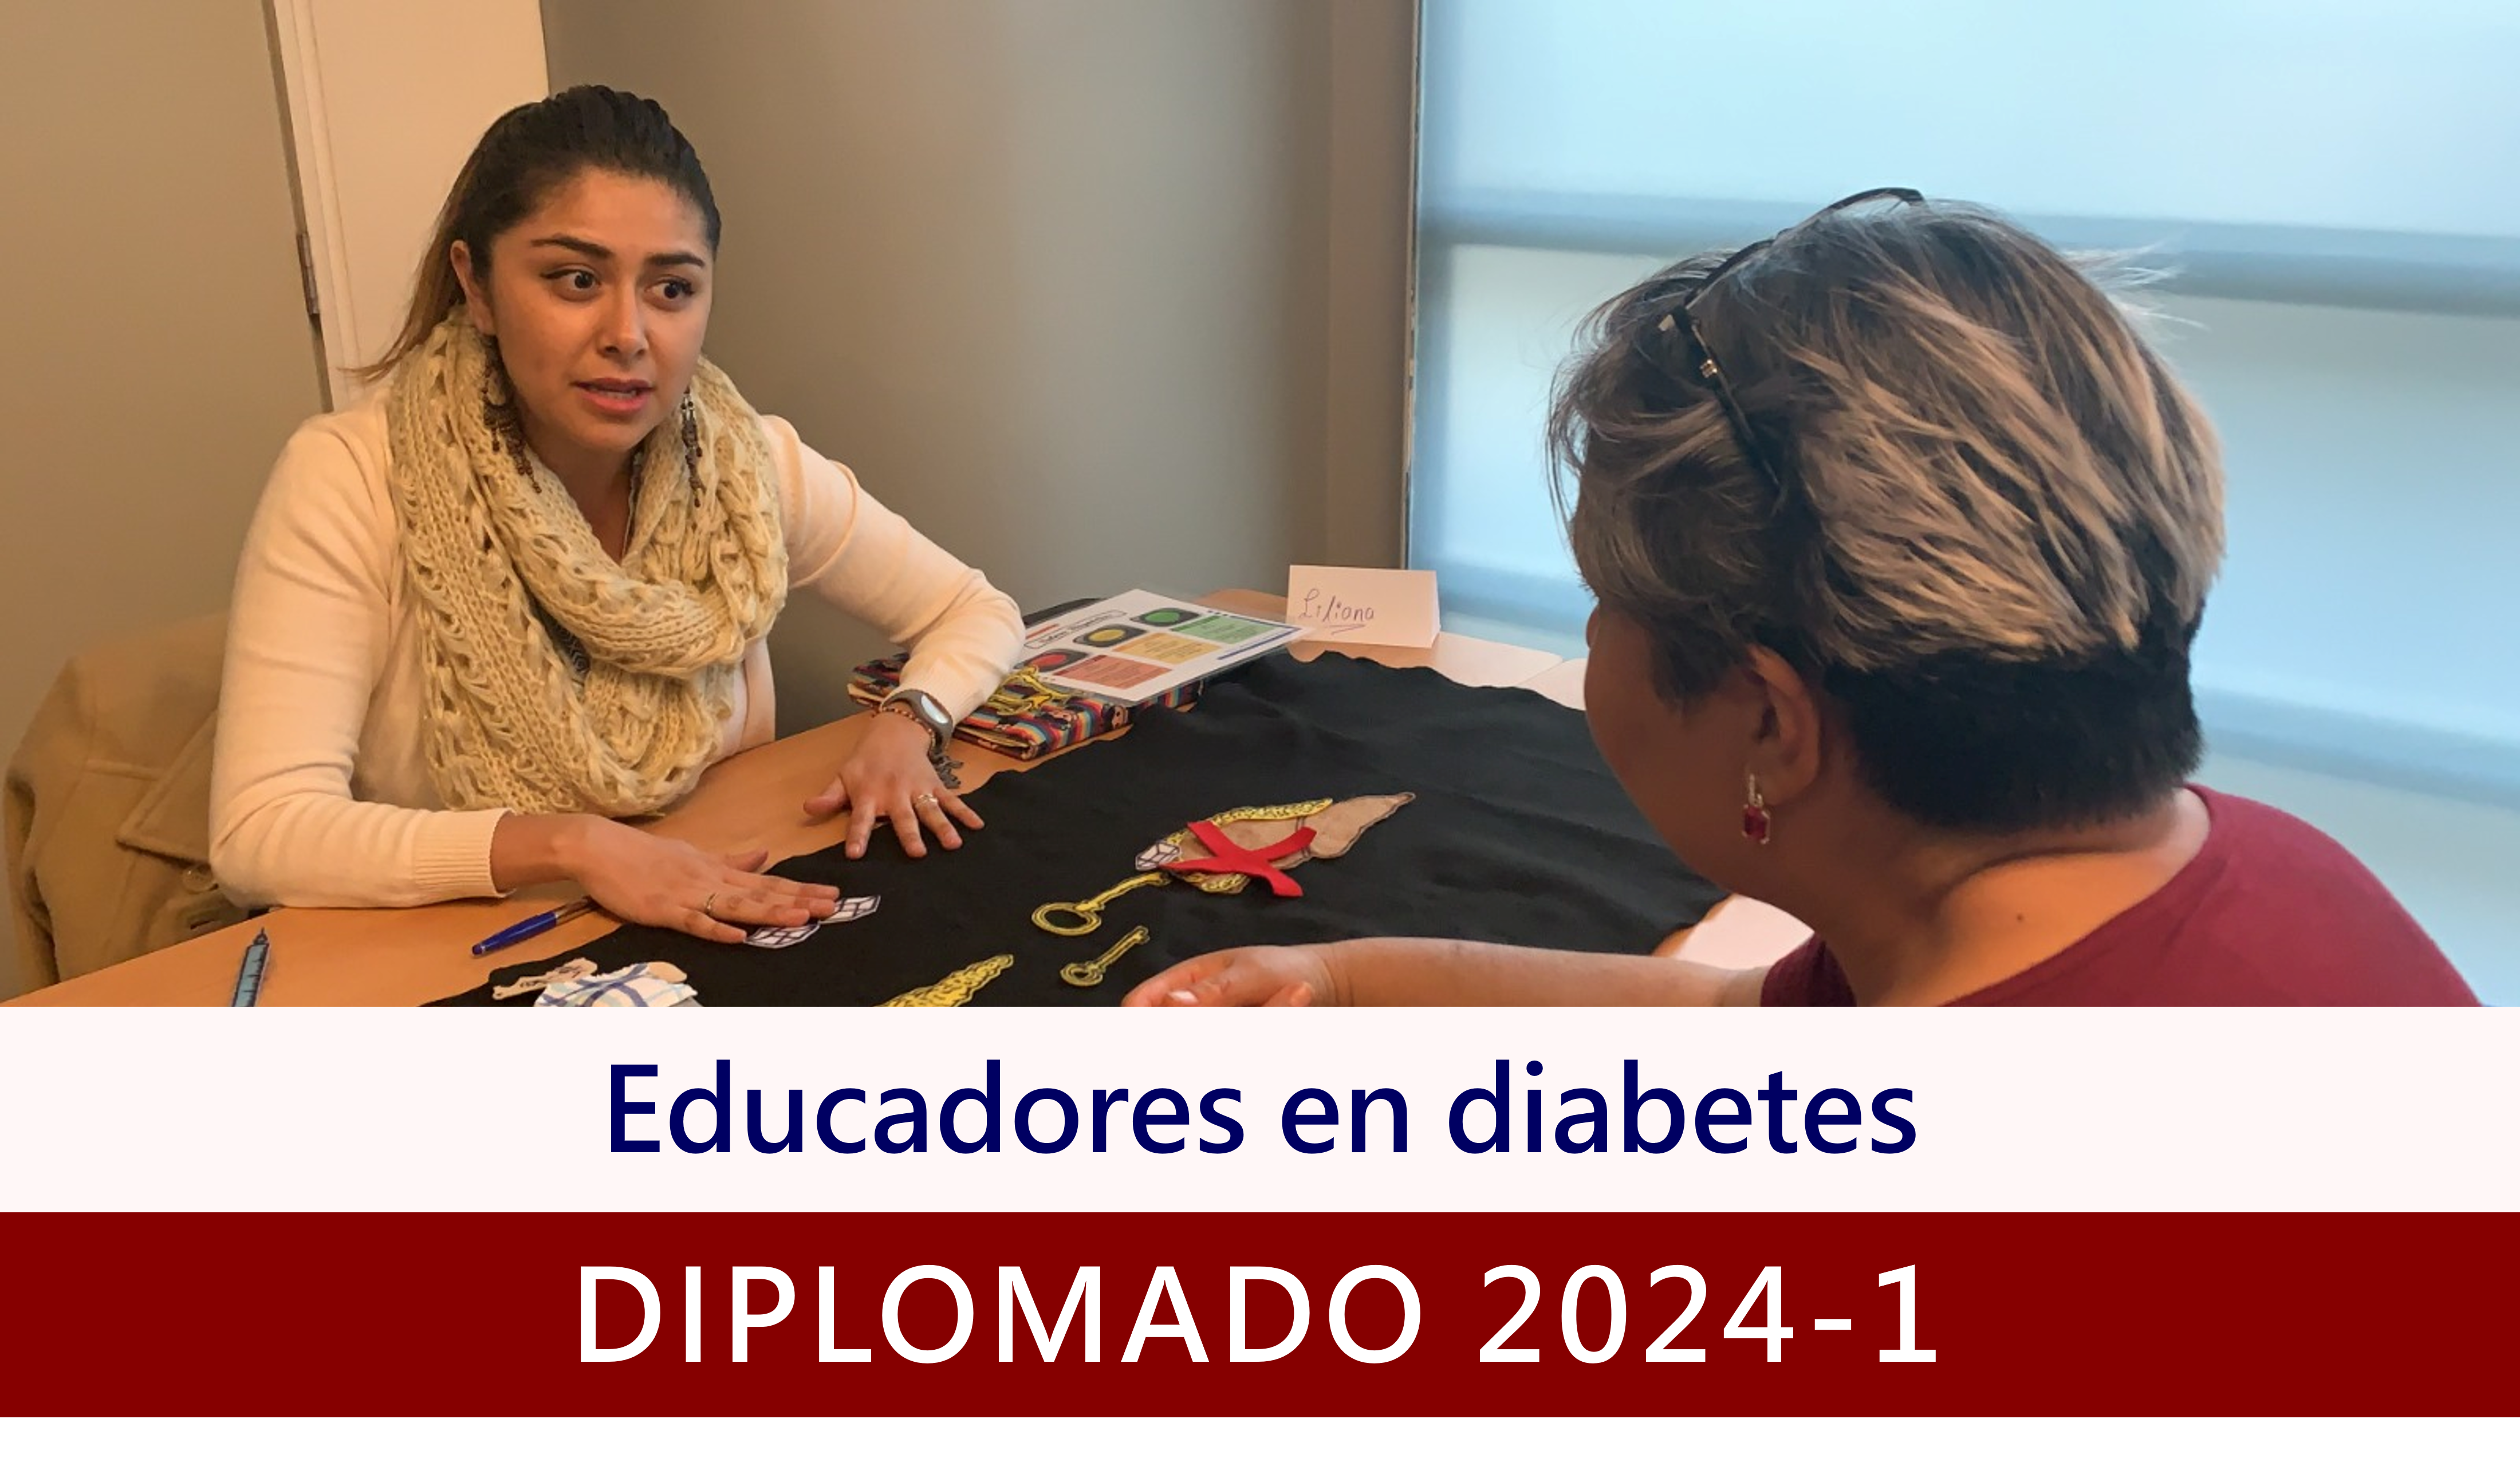 Diplomado de Educadores en Diabetes 2024-1